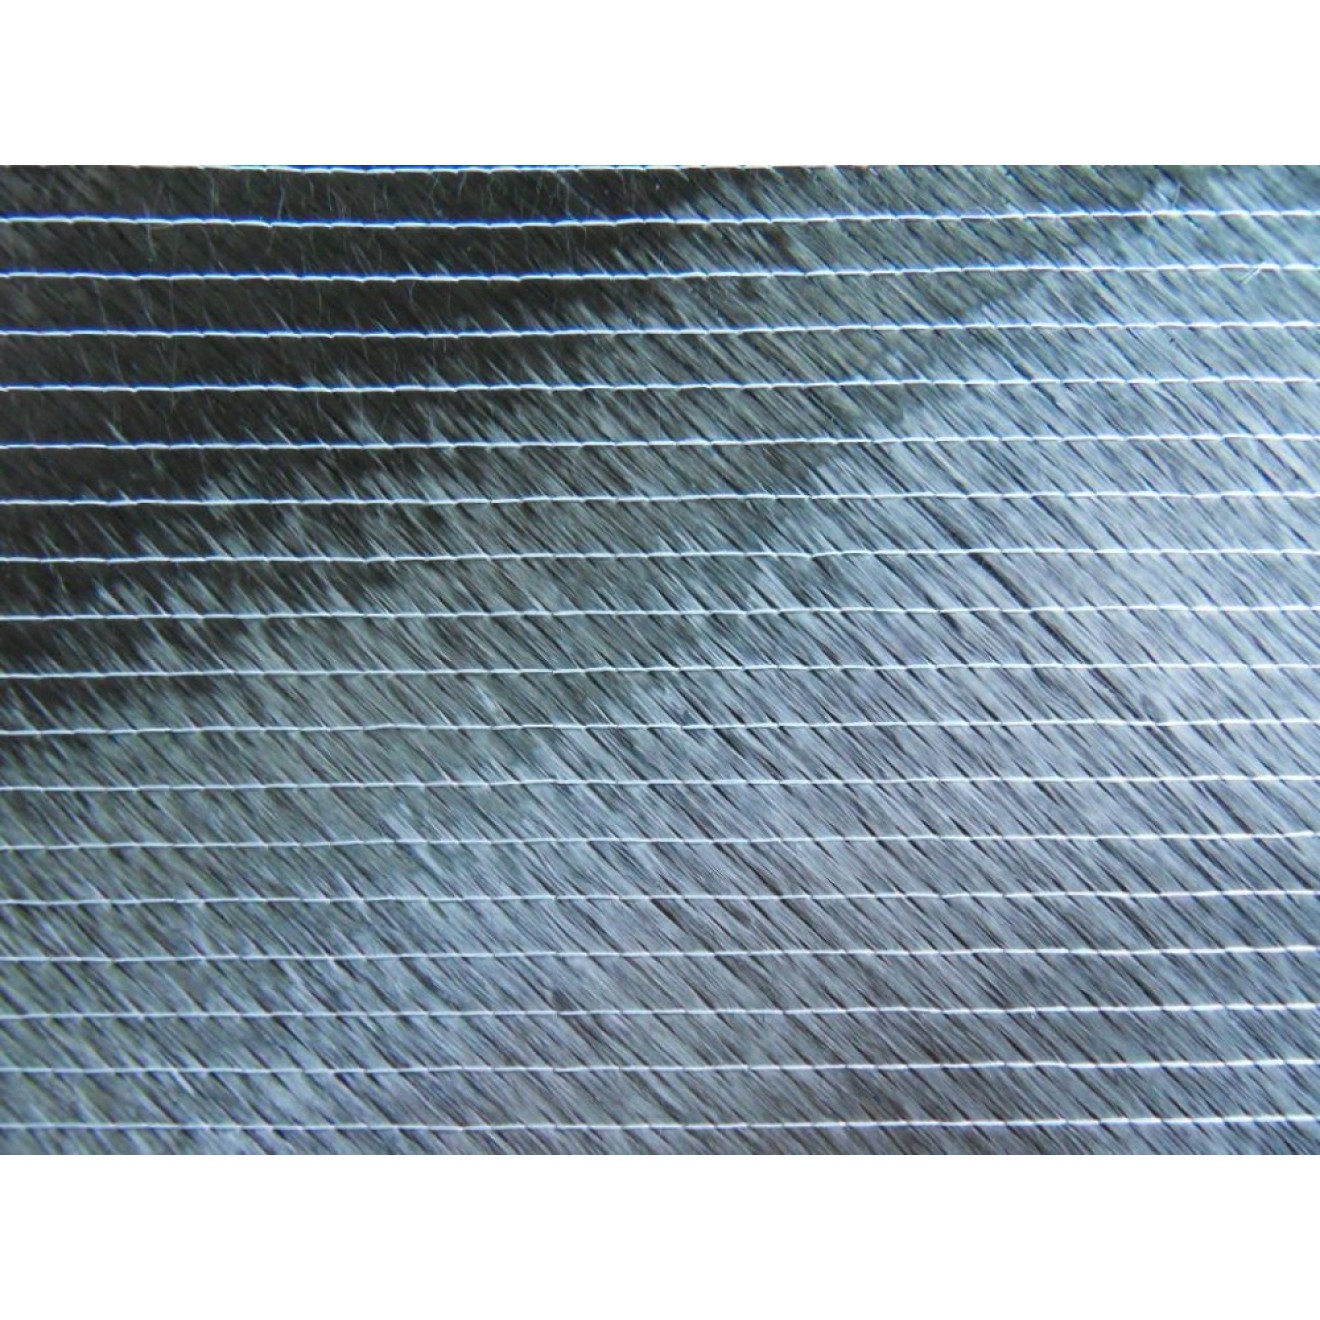 Carbon non-crimp fabric biaxial 150g/m², width 127cm